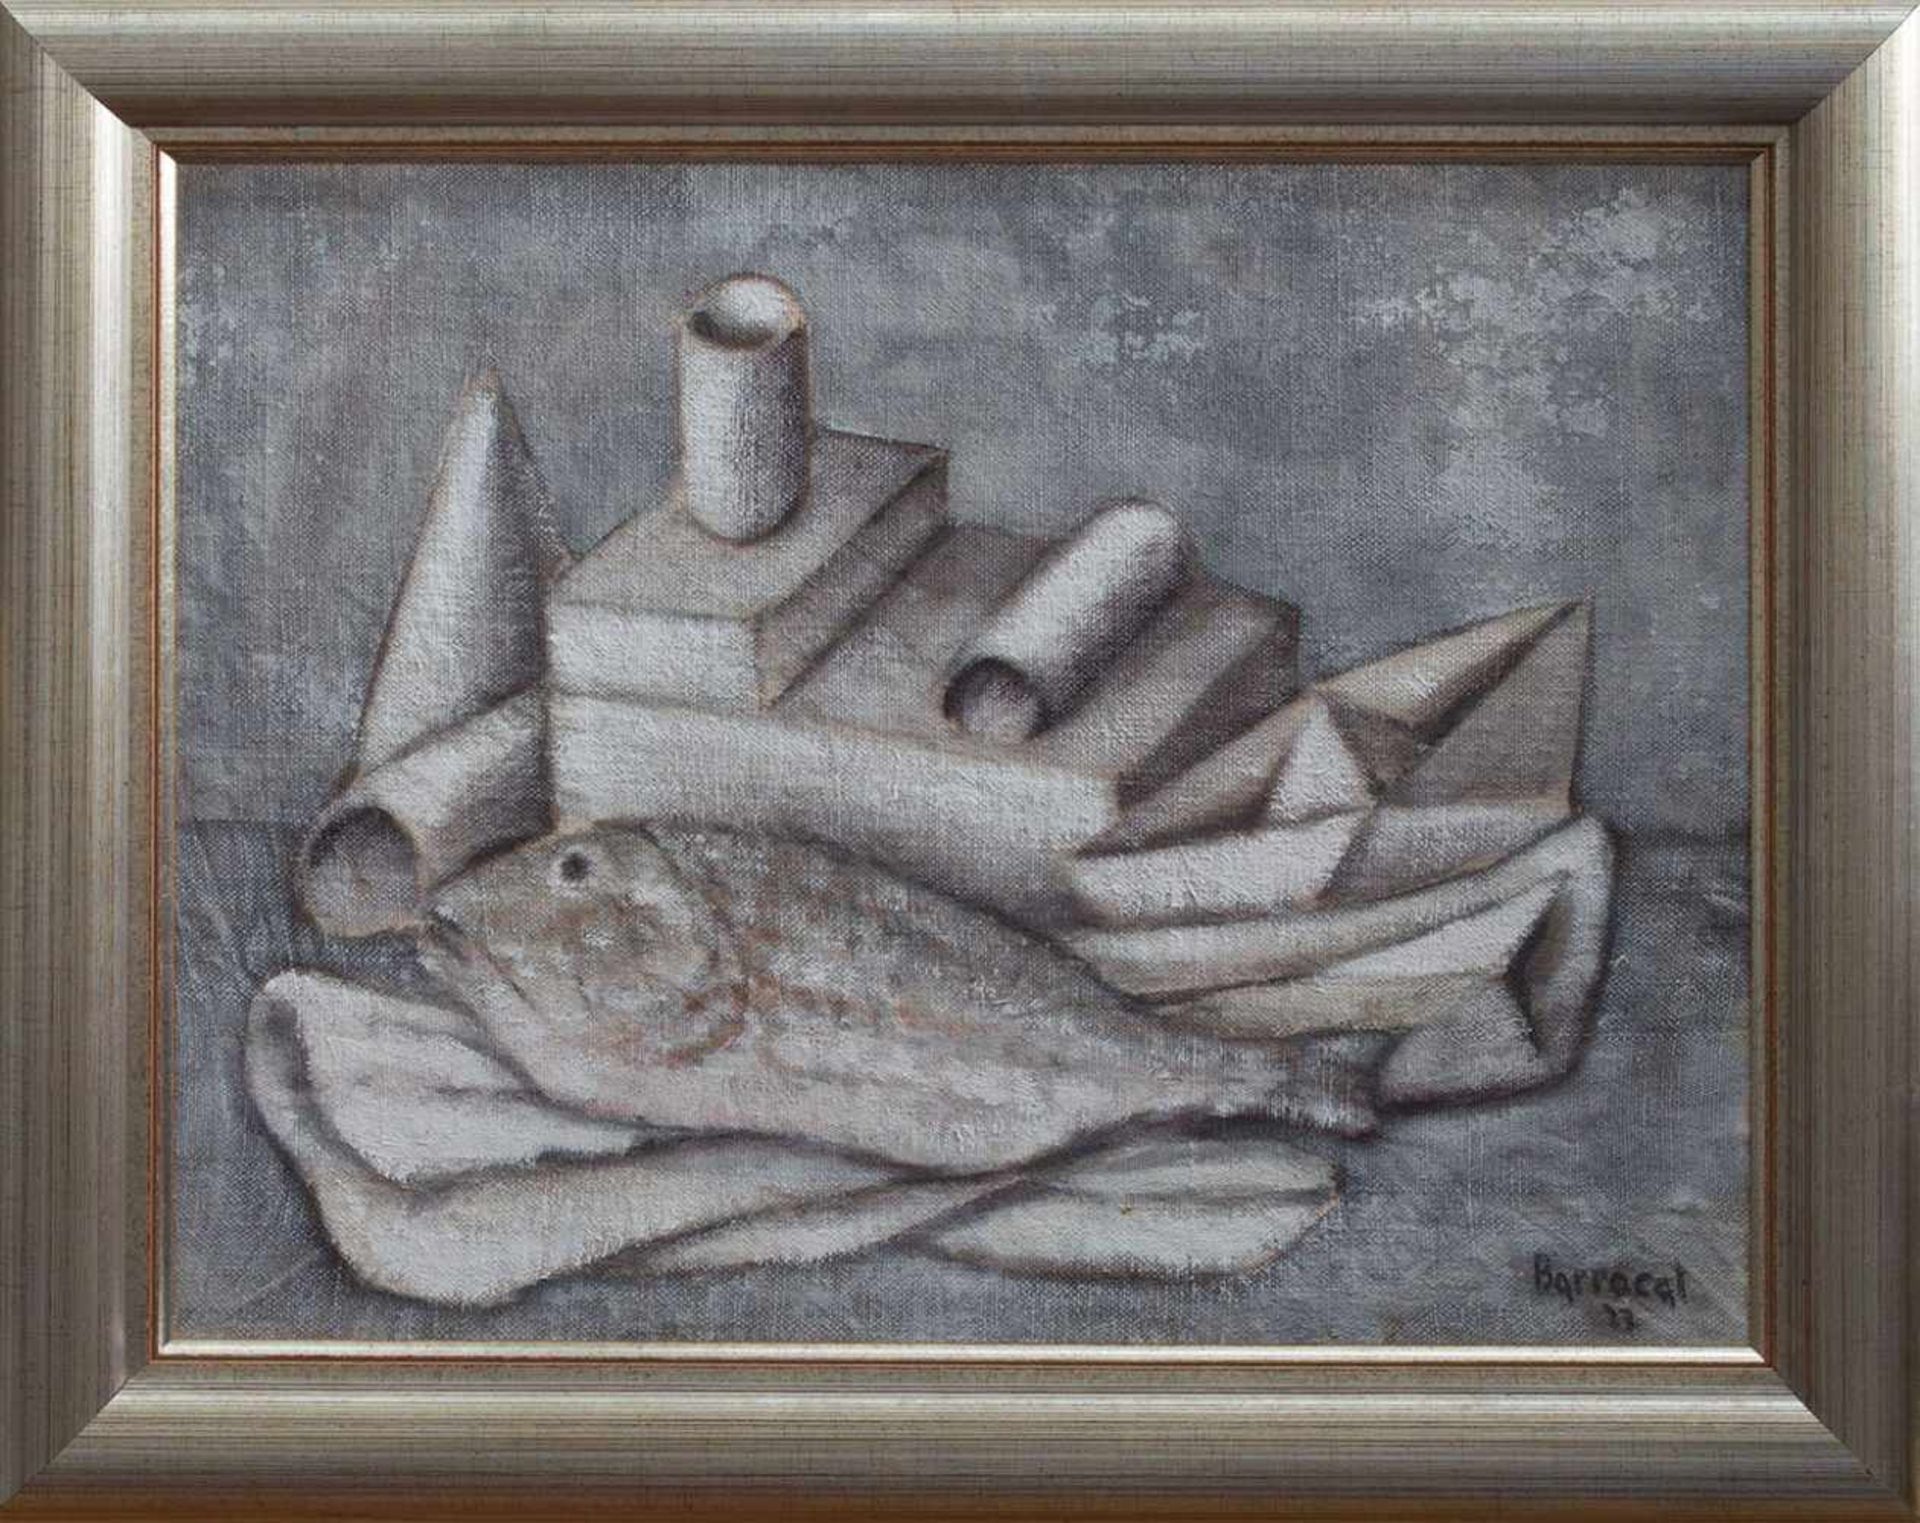 Barrocal (spanischer Maler d. 20. Jh.) Stillleben mit Fisch Öl/Leinwand (aufgezogen), 37,5 x 48